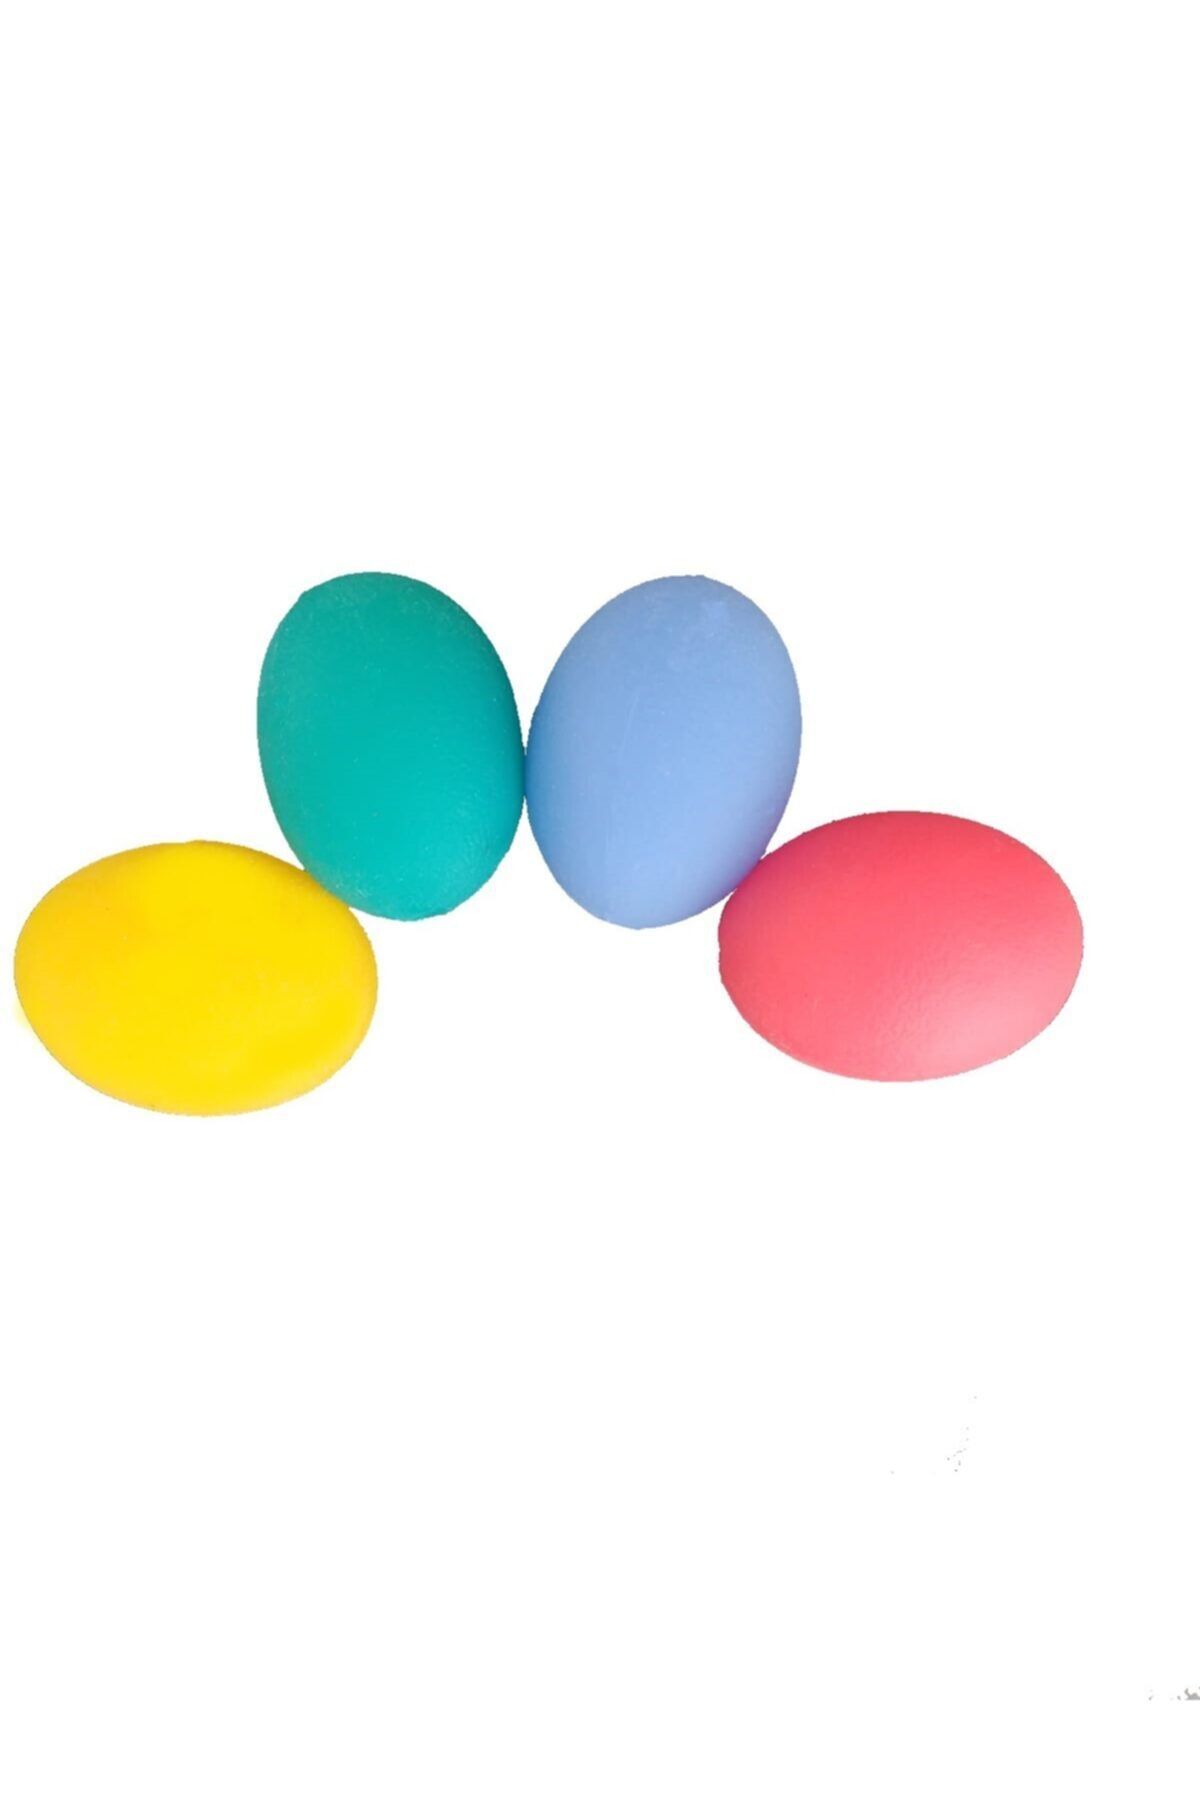 Morcivert 4 Lü Set4 Renk Silikon Stres Topu El Egzersiz Topu Fizik Tedavi Topu El Bilek Parmak Güçlendirme Top